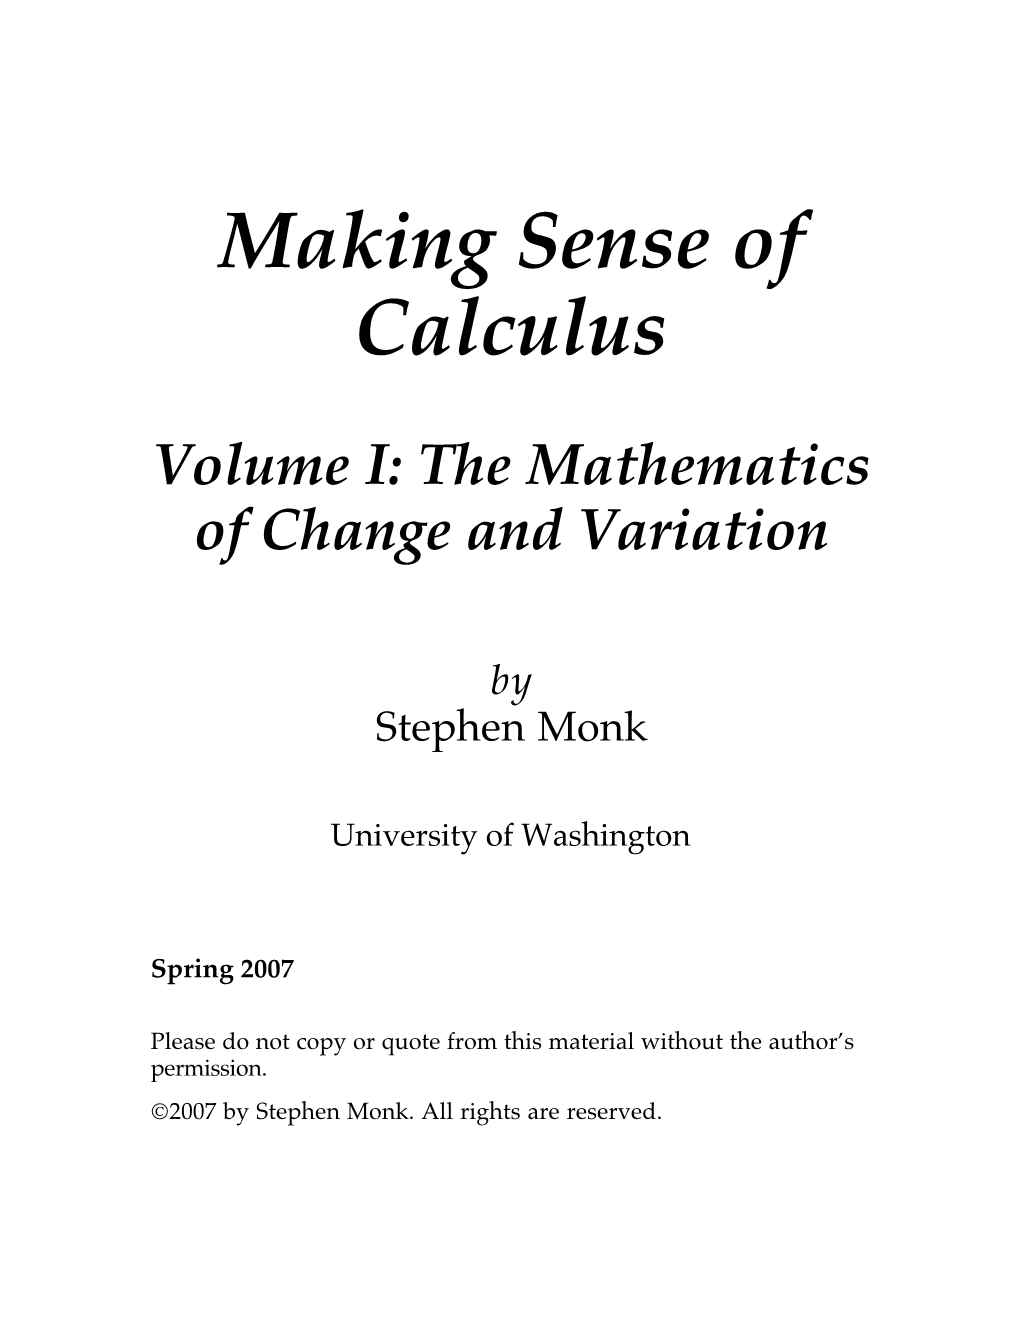 Making Sense of Calculus